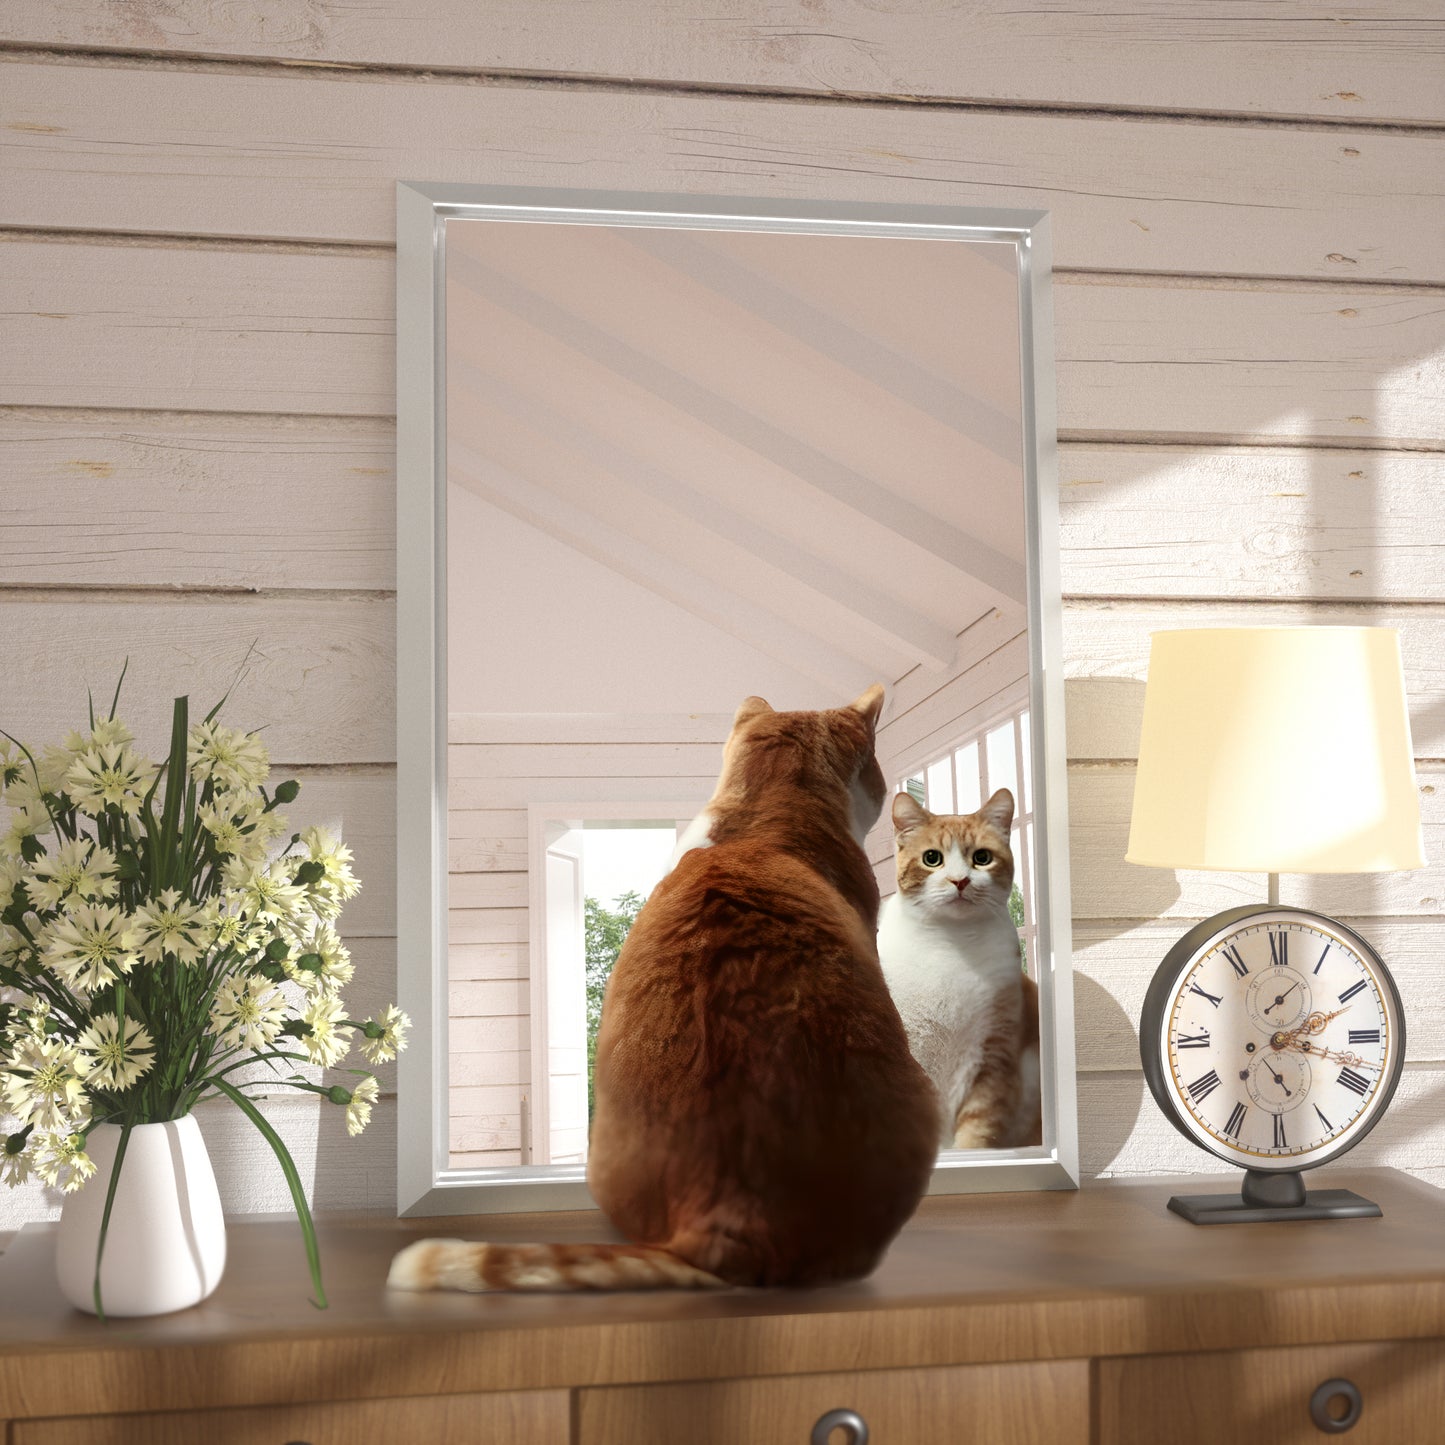 
                  
                    36 x 30 Inch | PILOCOS Farmhouse Vintage Rectangular Beveled Frame Bathroom Mirror for Wall
                  
                